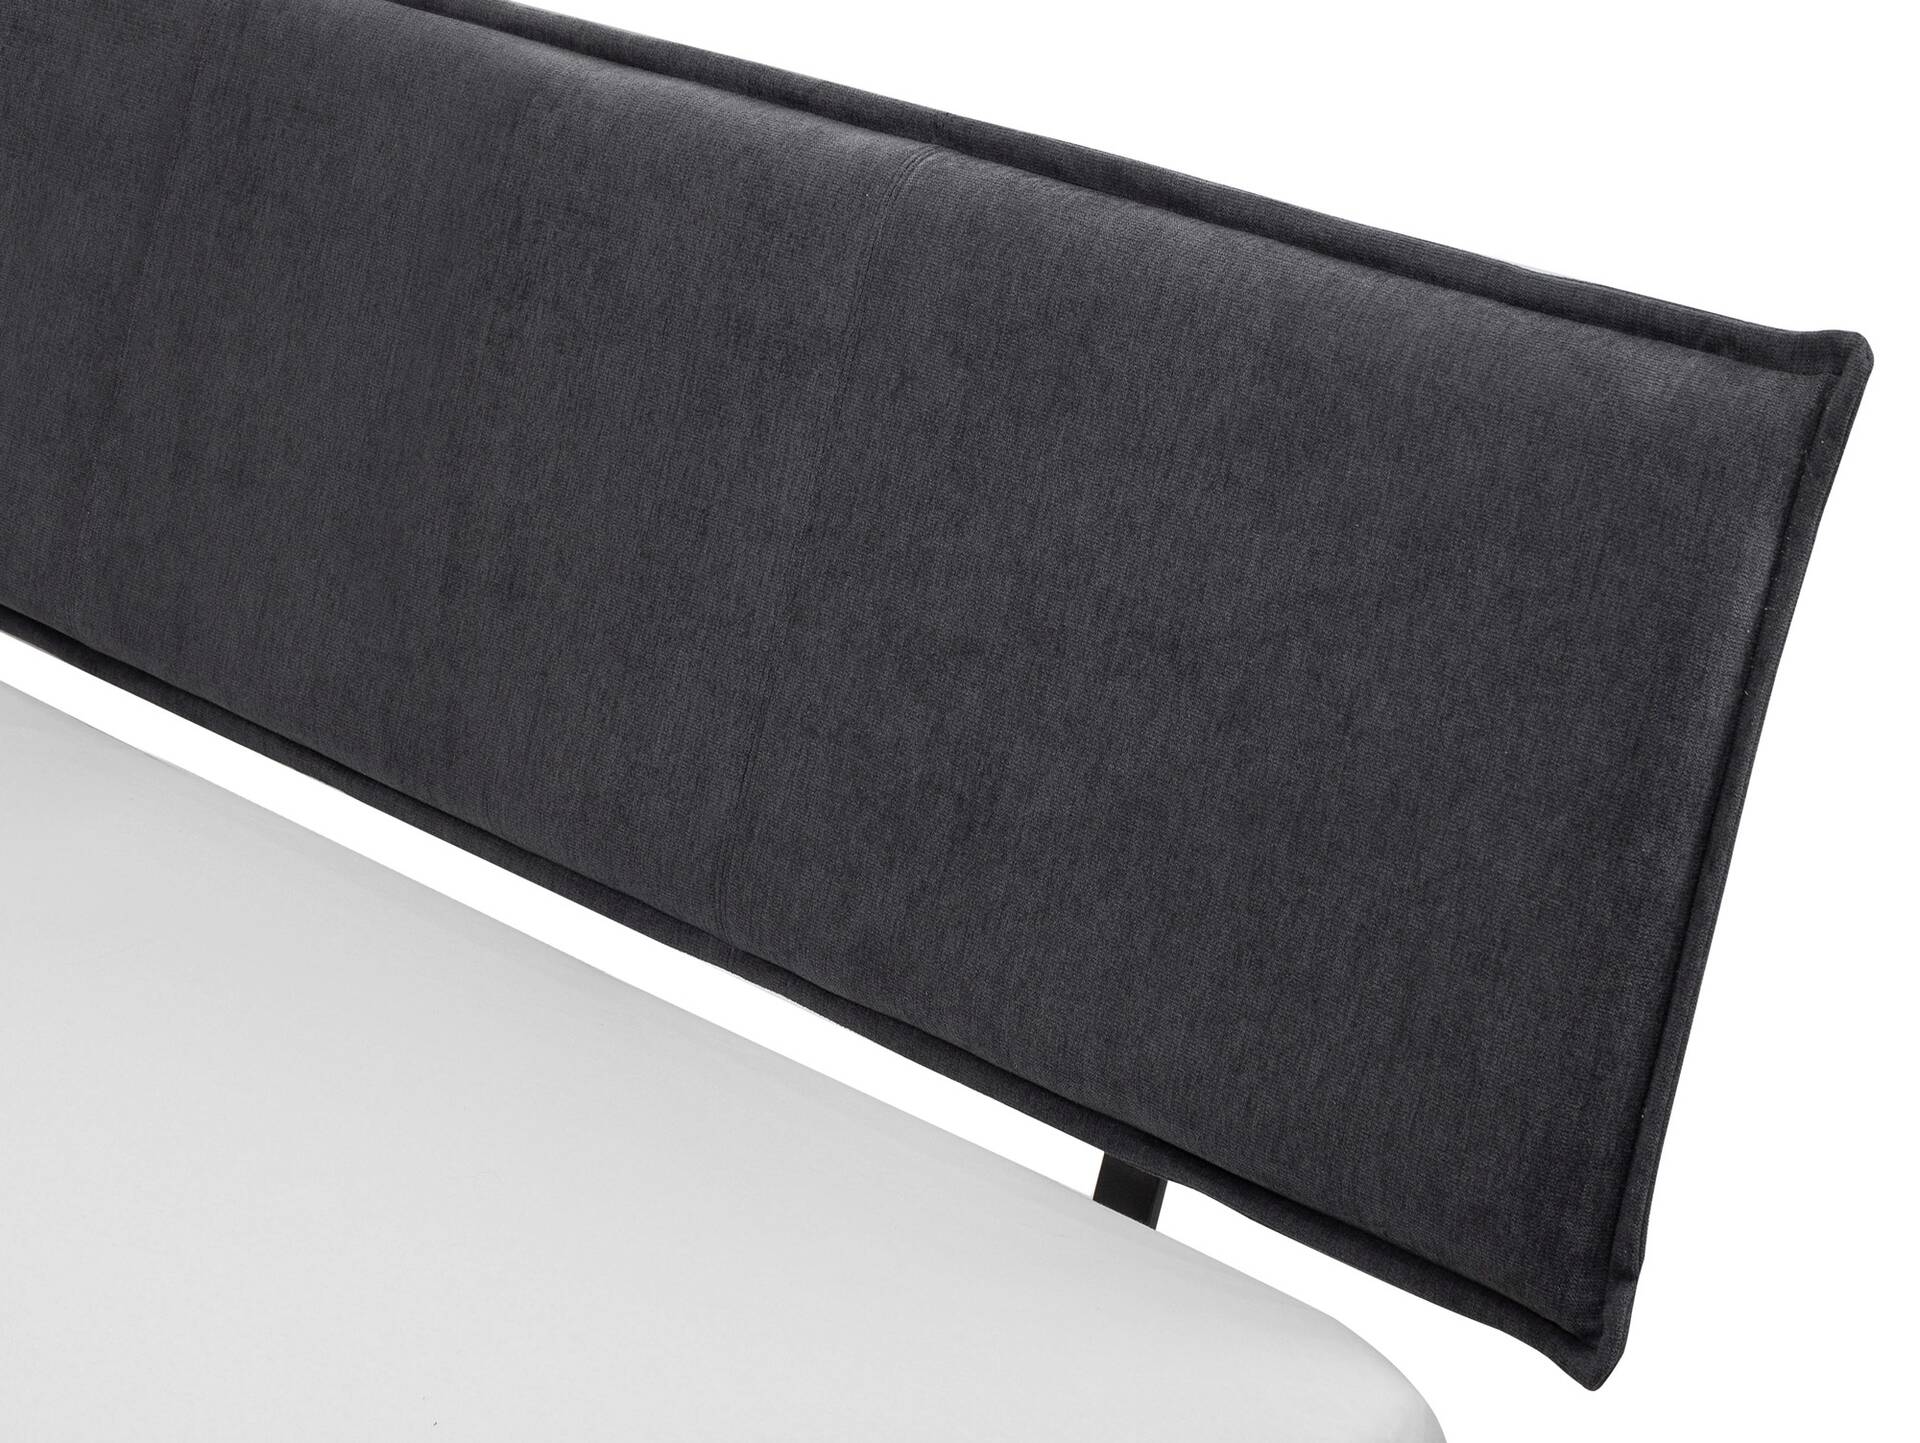 CALIDO 4-Fuß-Bett mit Polster-Kopfteil, Material Massivholz 140 x 220 cm | Eiche geölt | Stoff Anthrazit | Komforthöhe